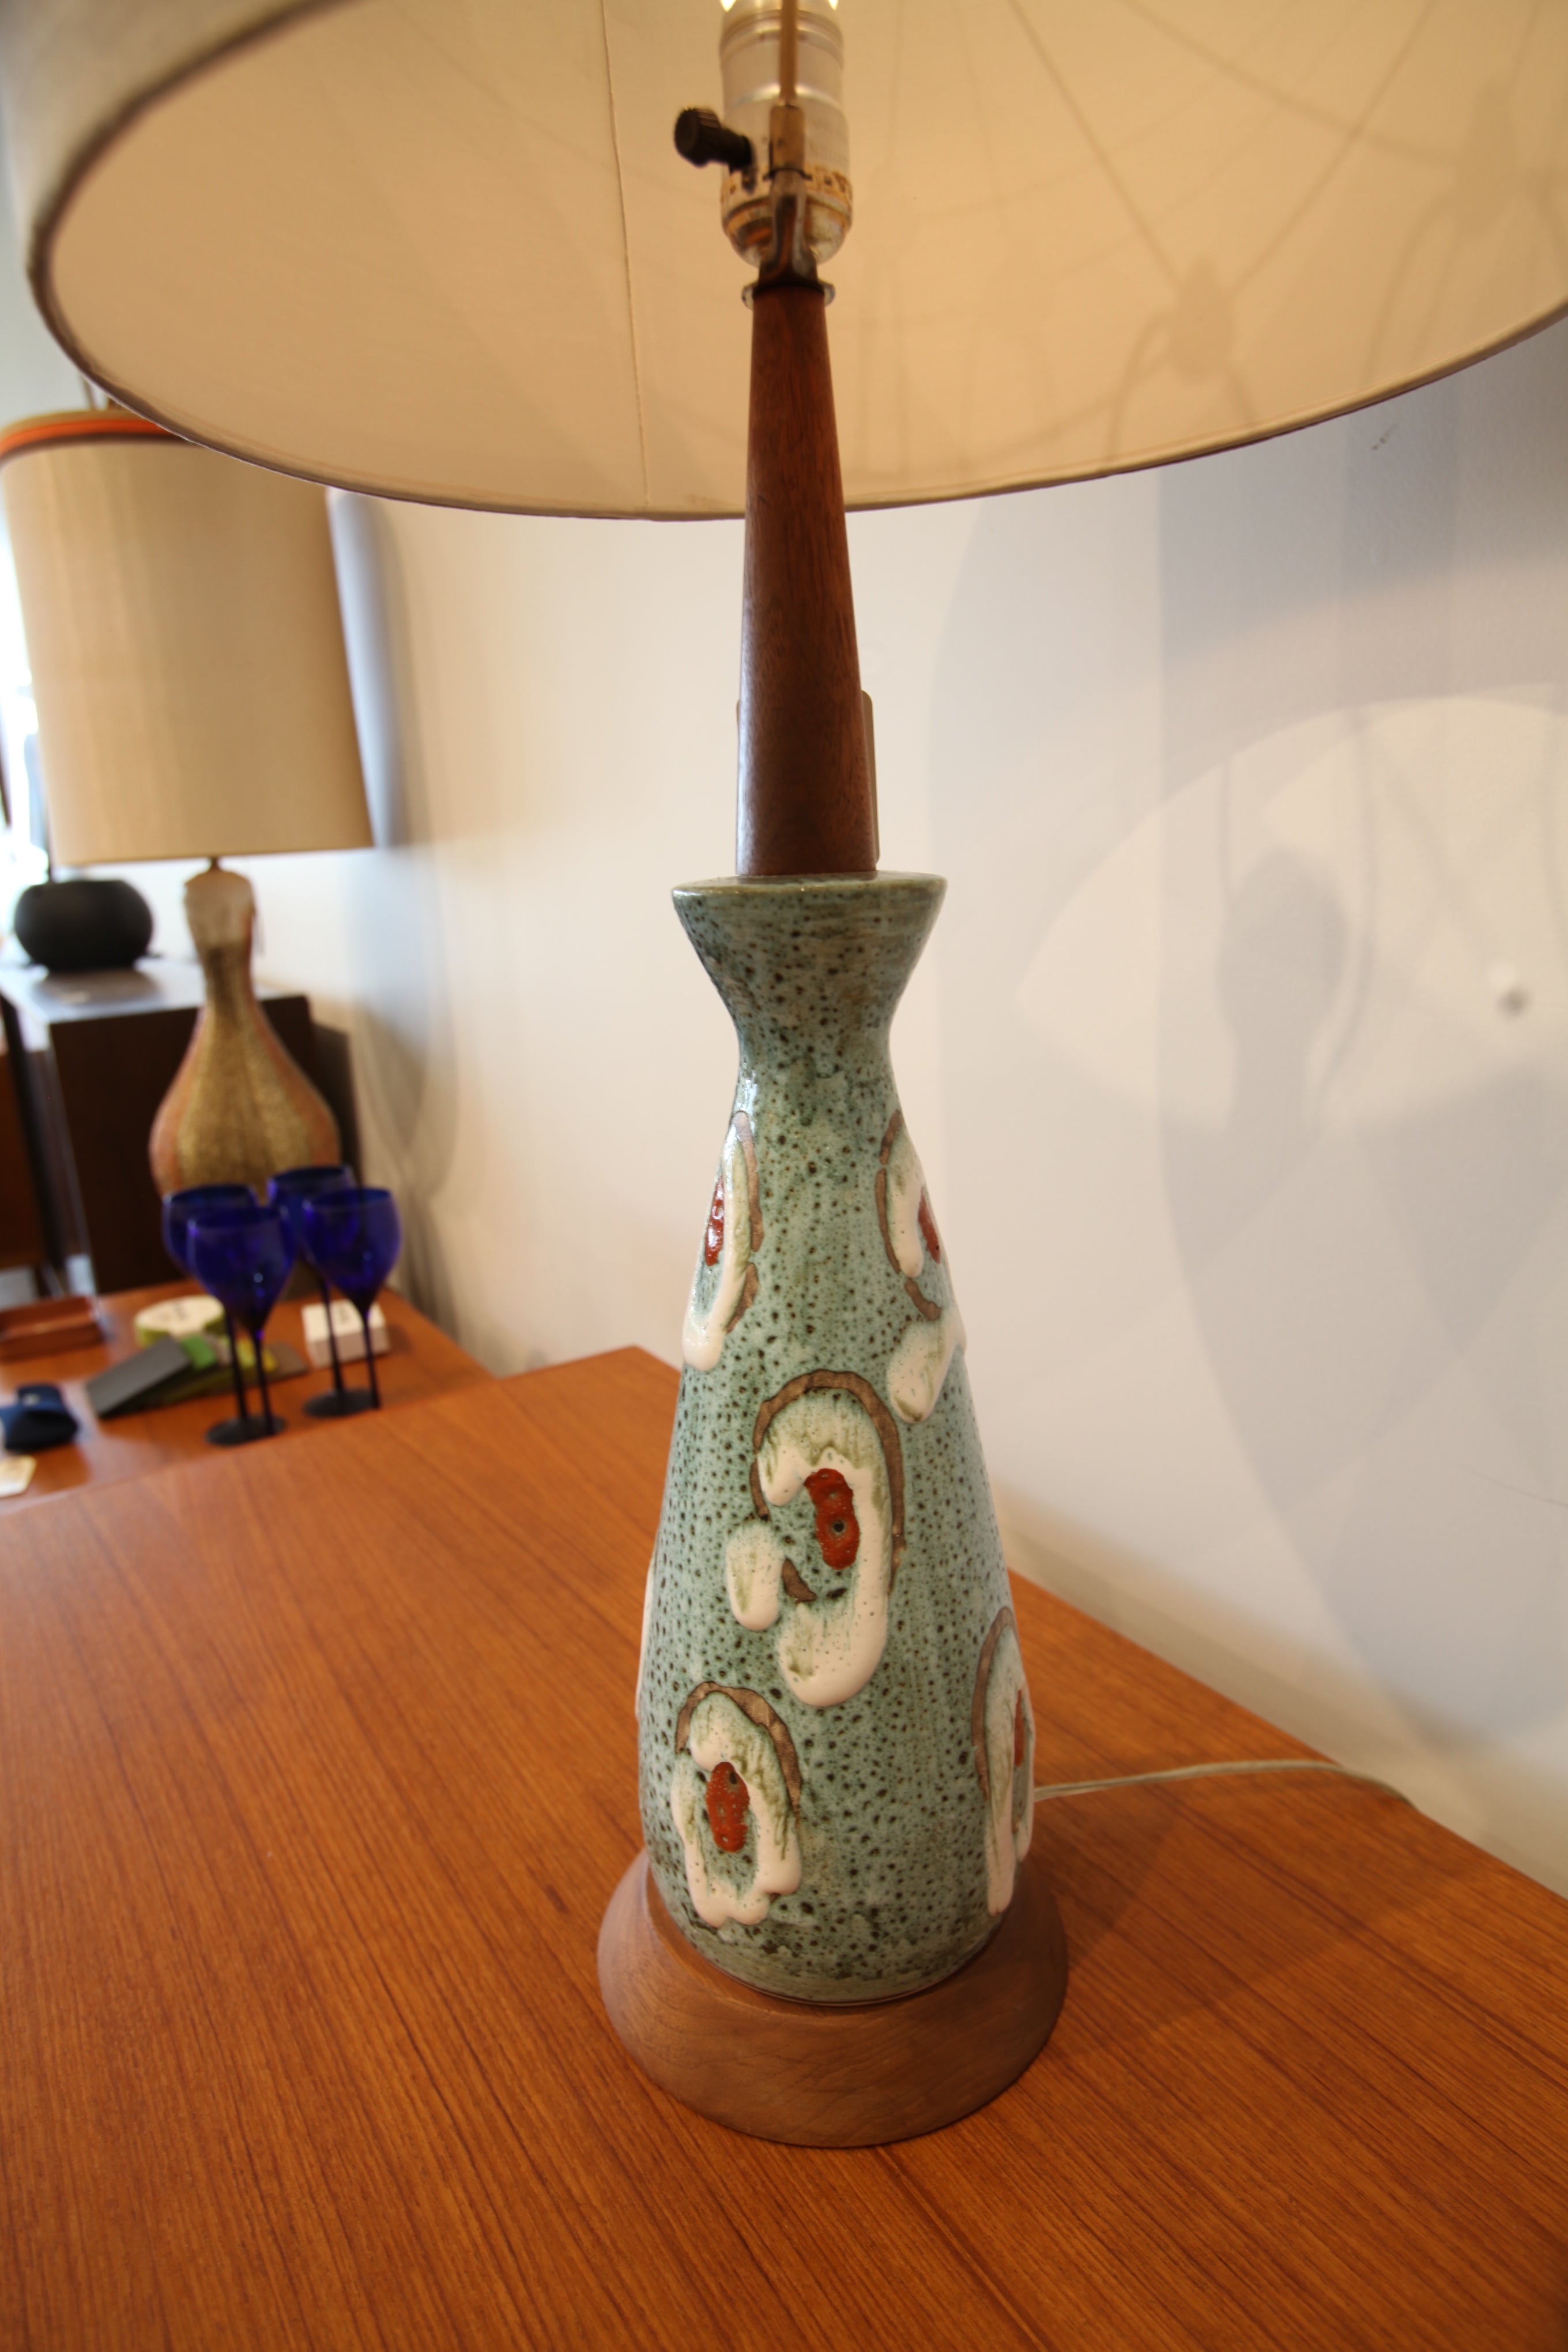 Vintage Table Lamp w/ Walnut Base & Stem (30.75"H x 16.5" Dia.)